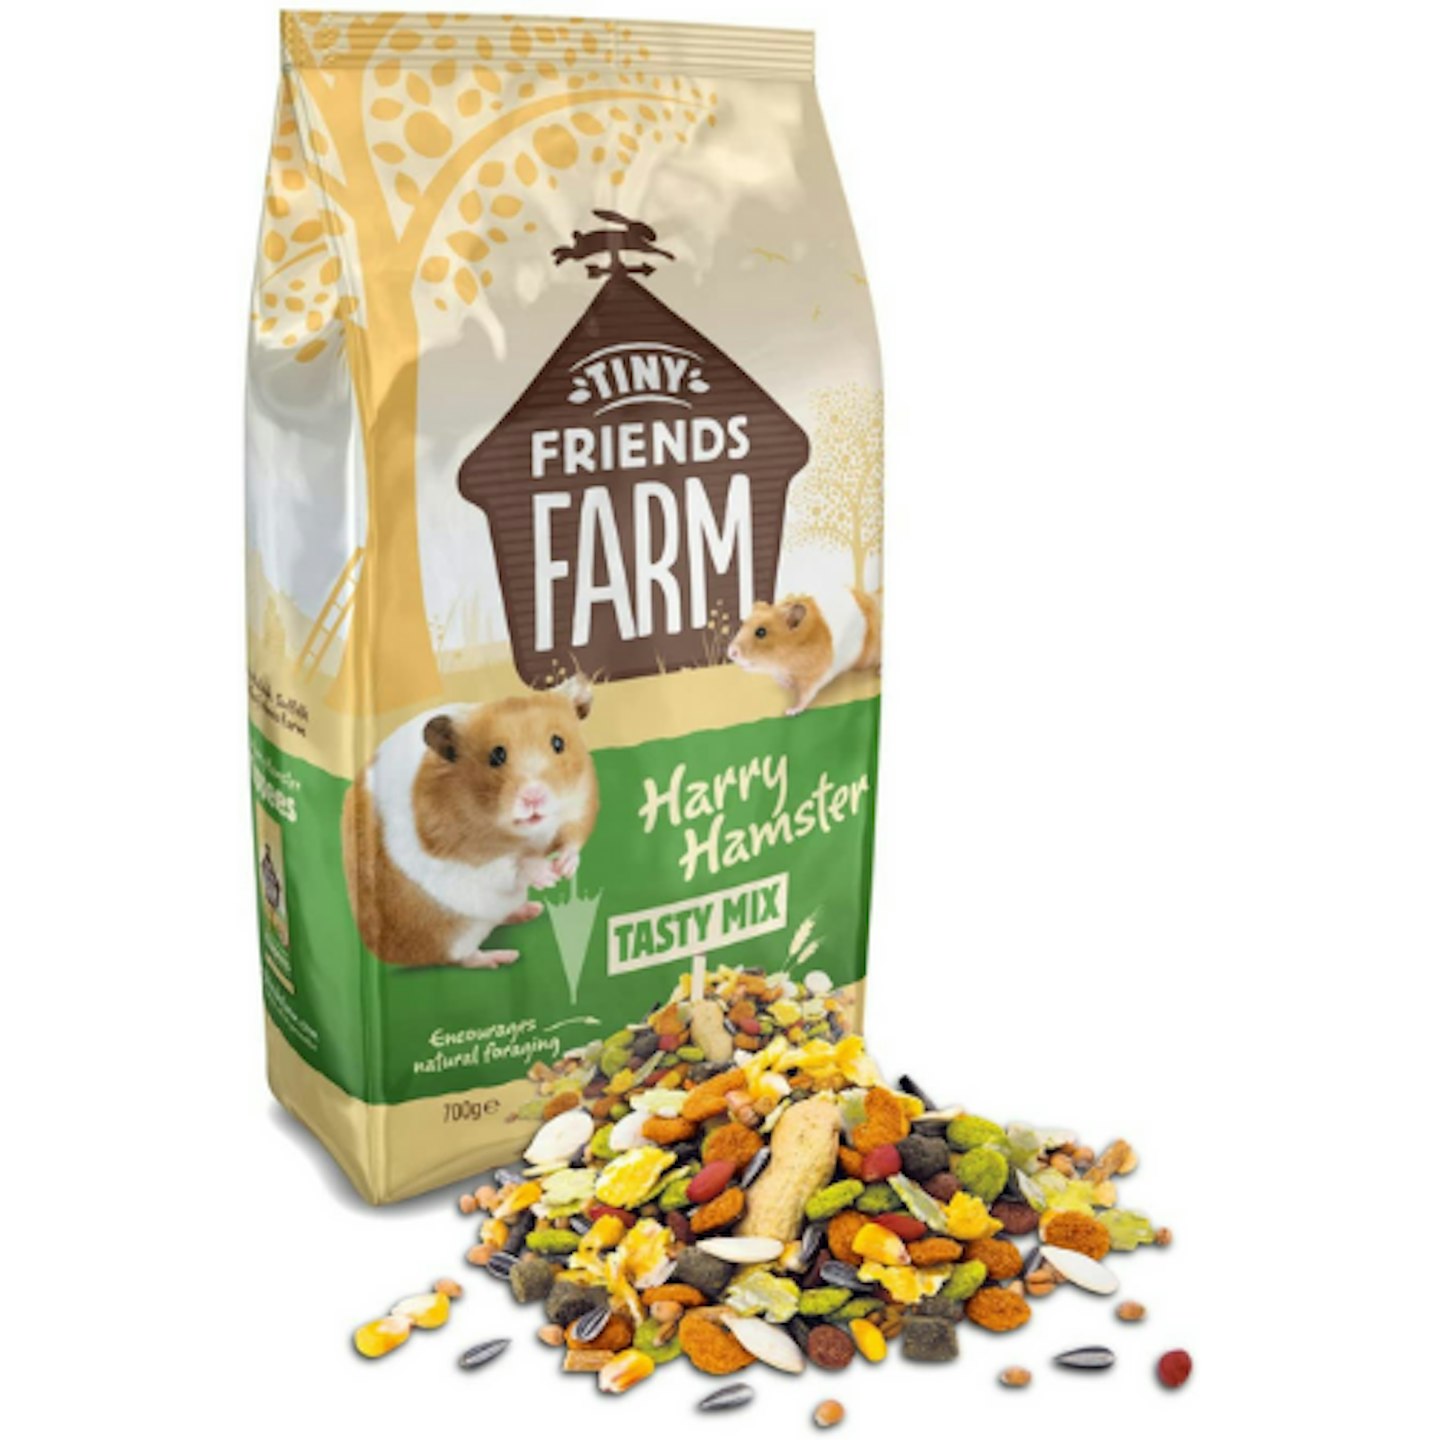 Supreme Tiny Friends Farm Harry Hamster Tasty Mix, 700g x 6